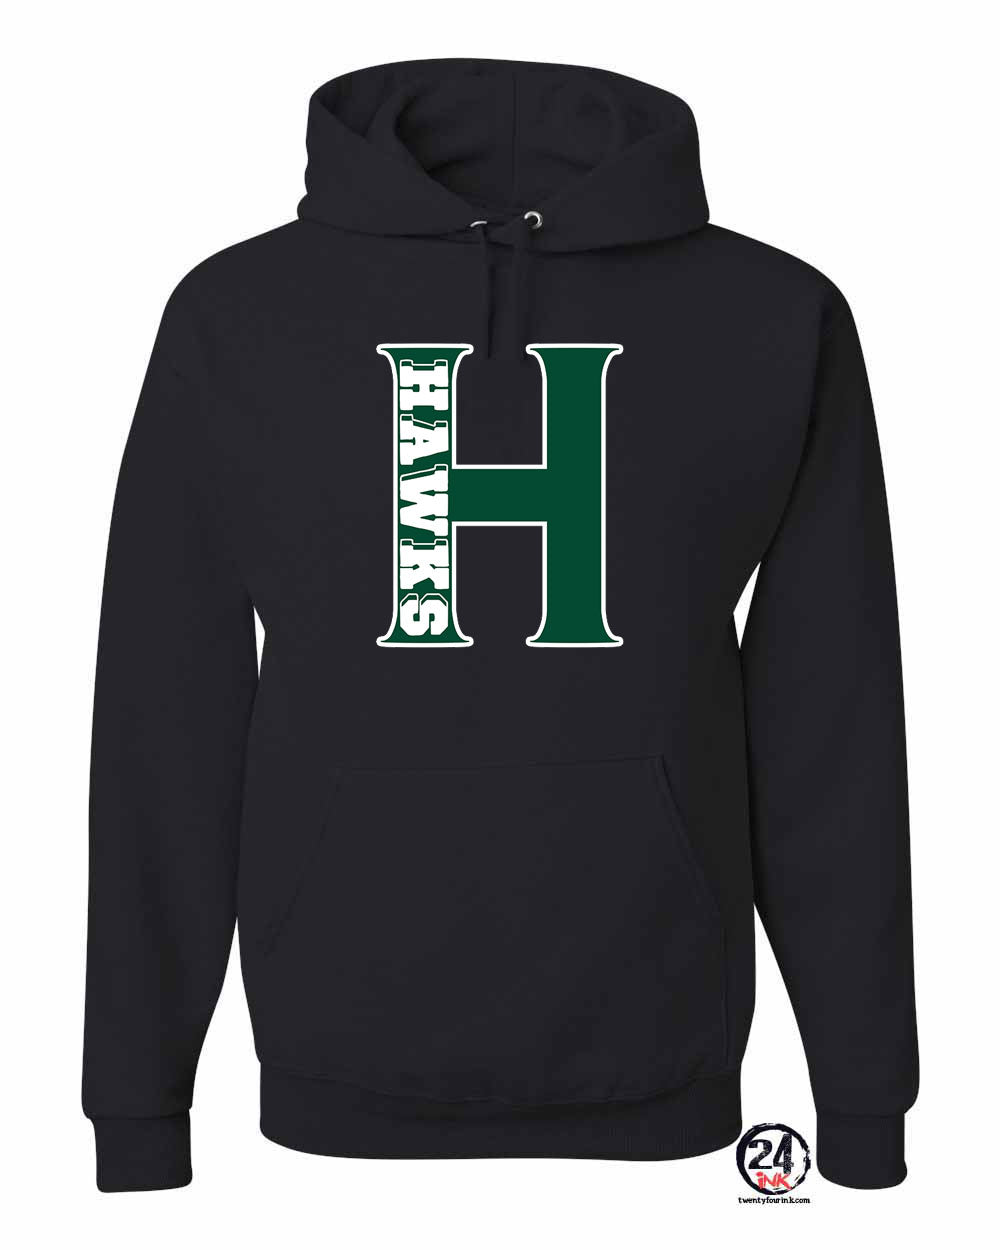 Hilltop Country Day School Design 5 Hooded Sweatshirt